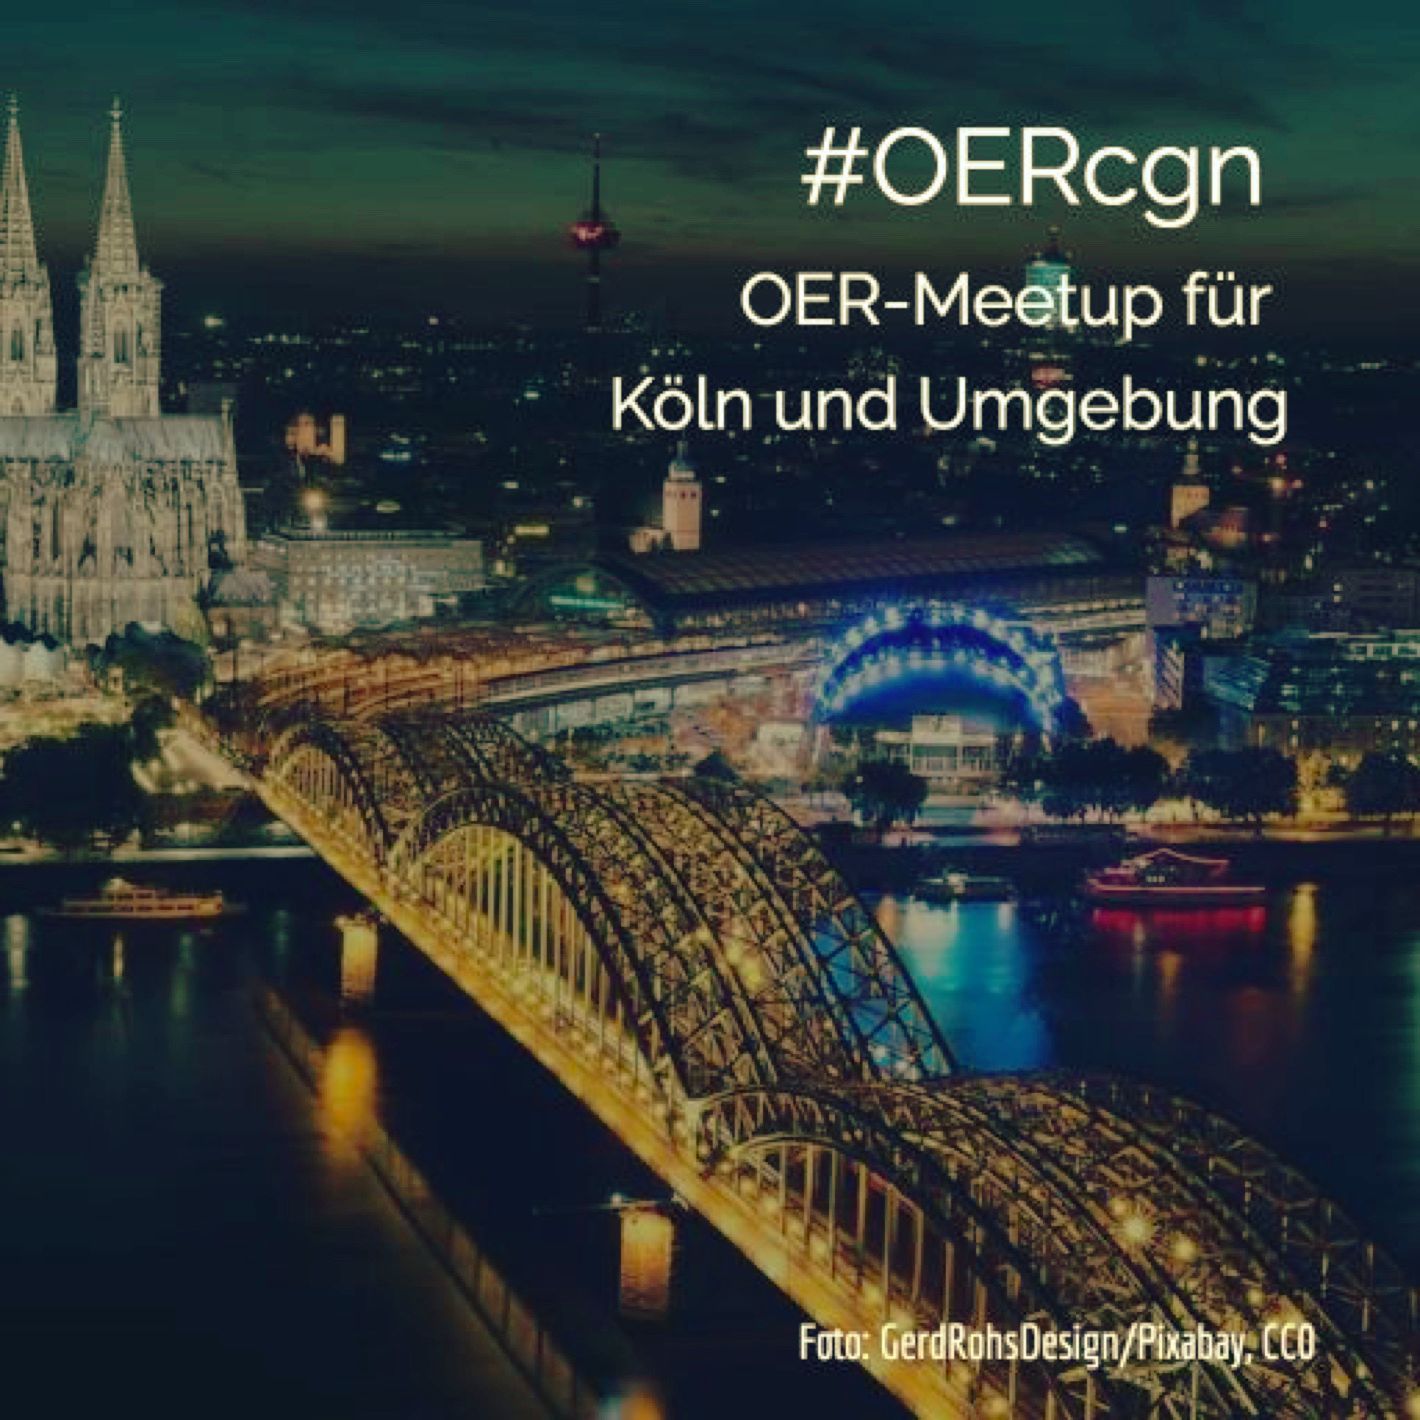 #OERcgn 004: nOERd news vom OERcgn-Meetup #8 (5. Februar 2018)